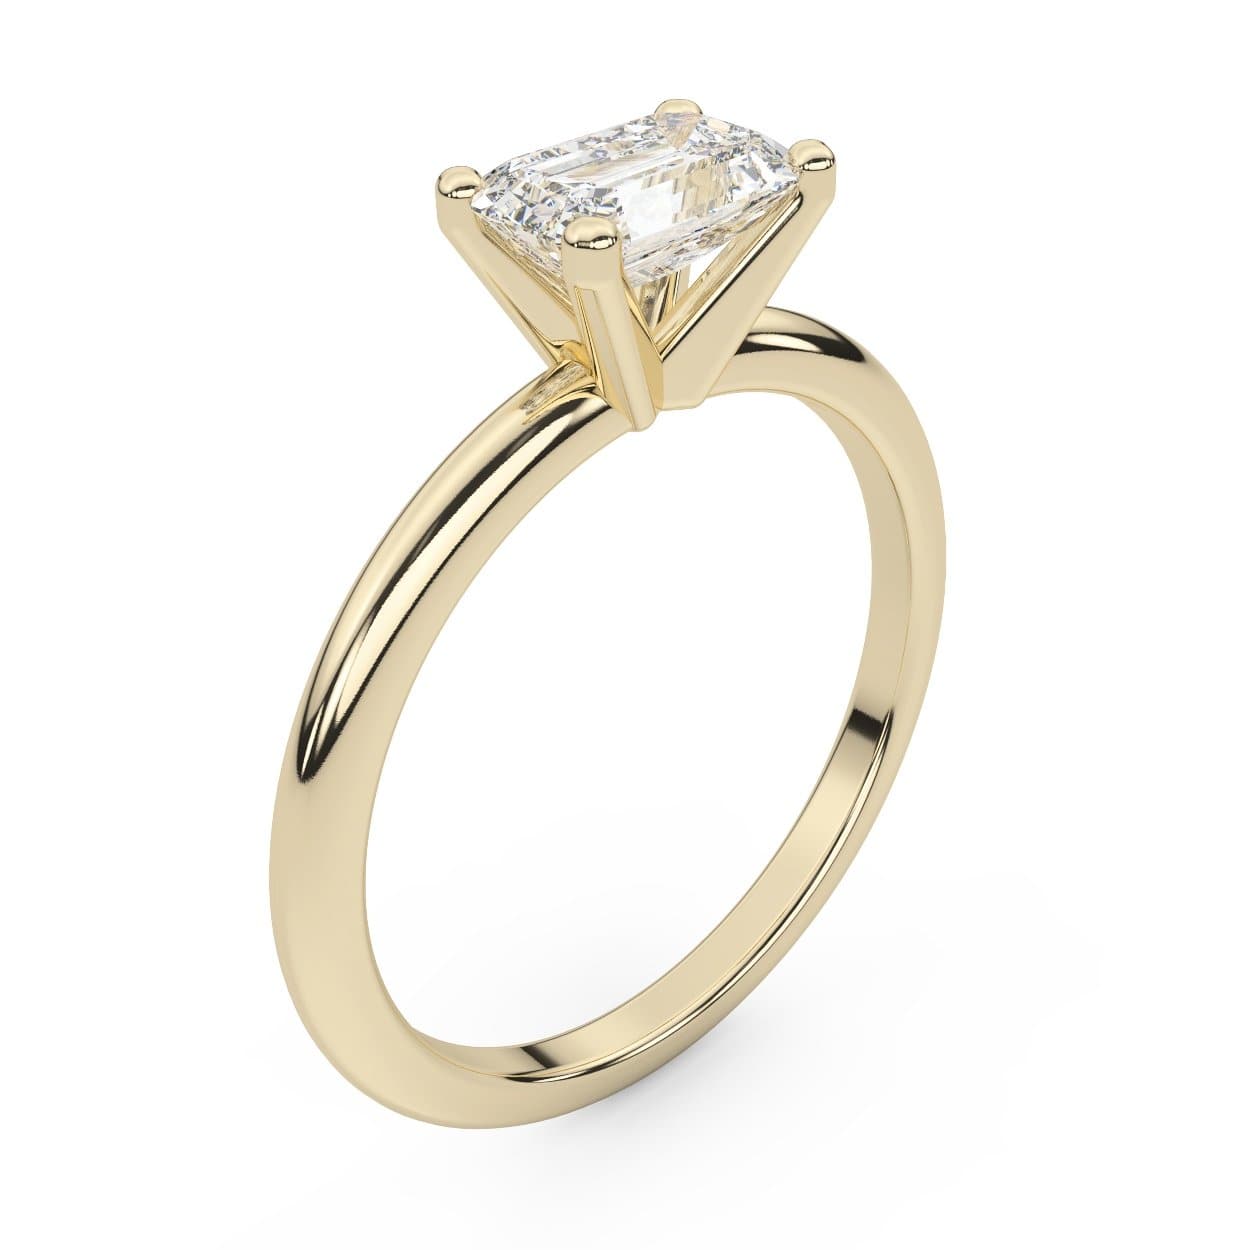 East West Emerald Cut Diamond Engagement Ring